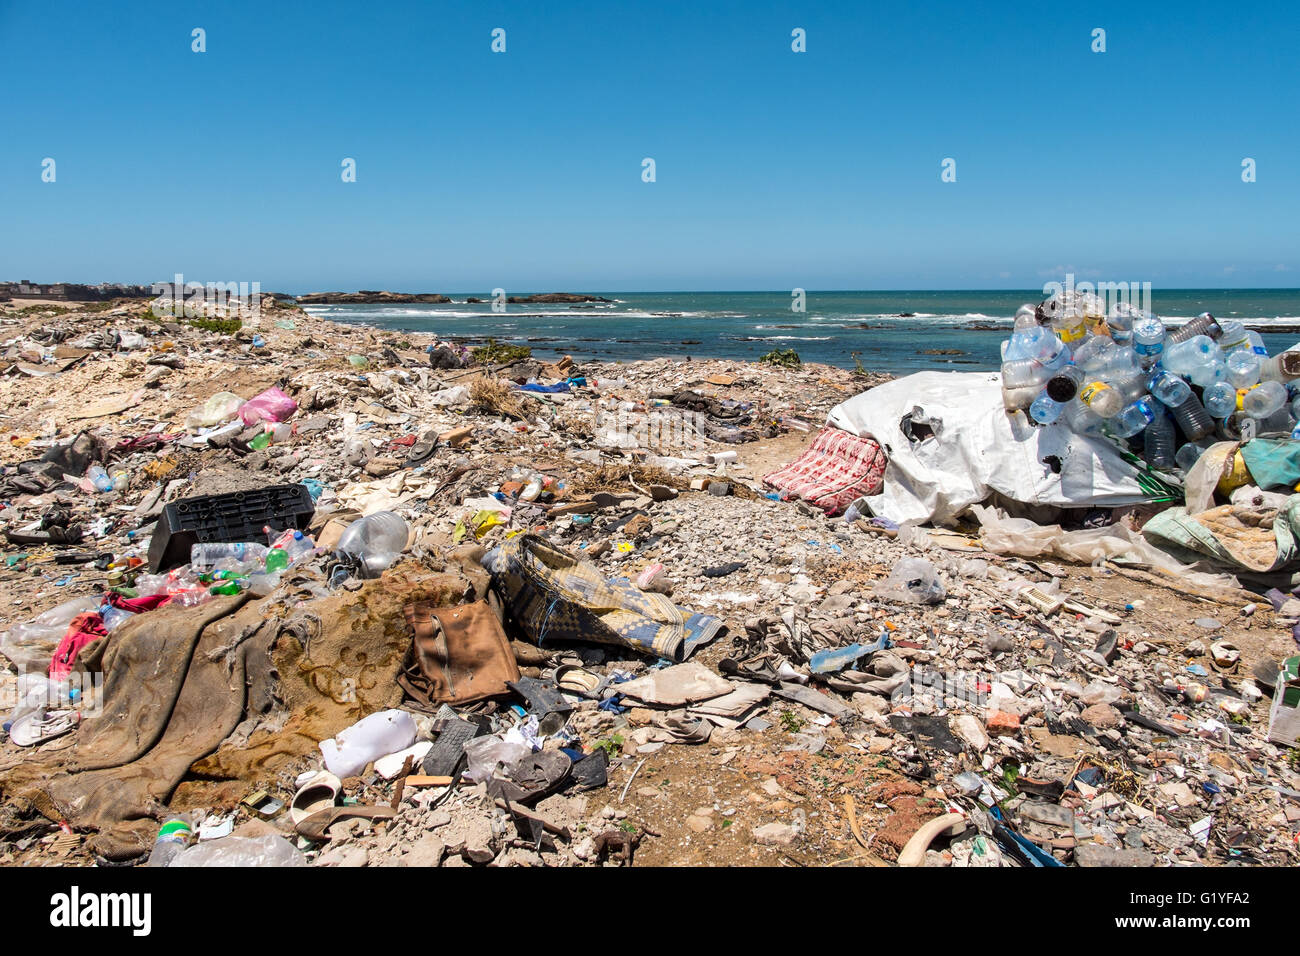 Rubbish dumped on a beach on the Atlantic coast of Morocco Stock Photo